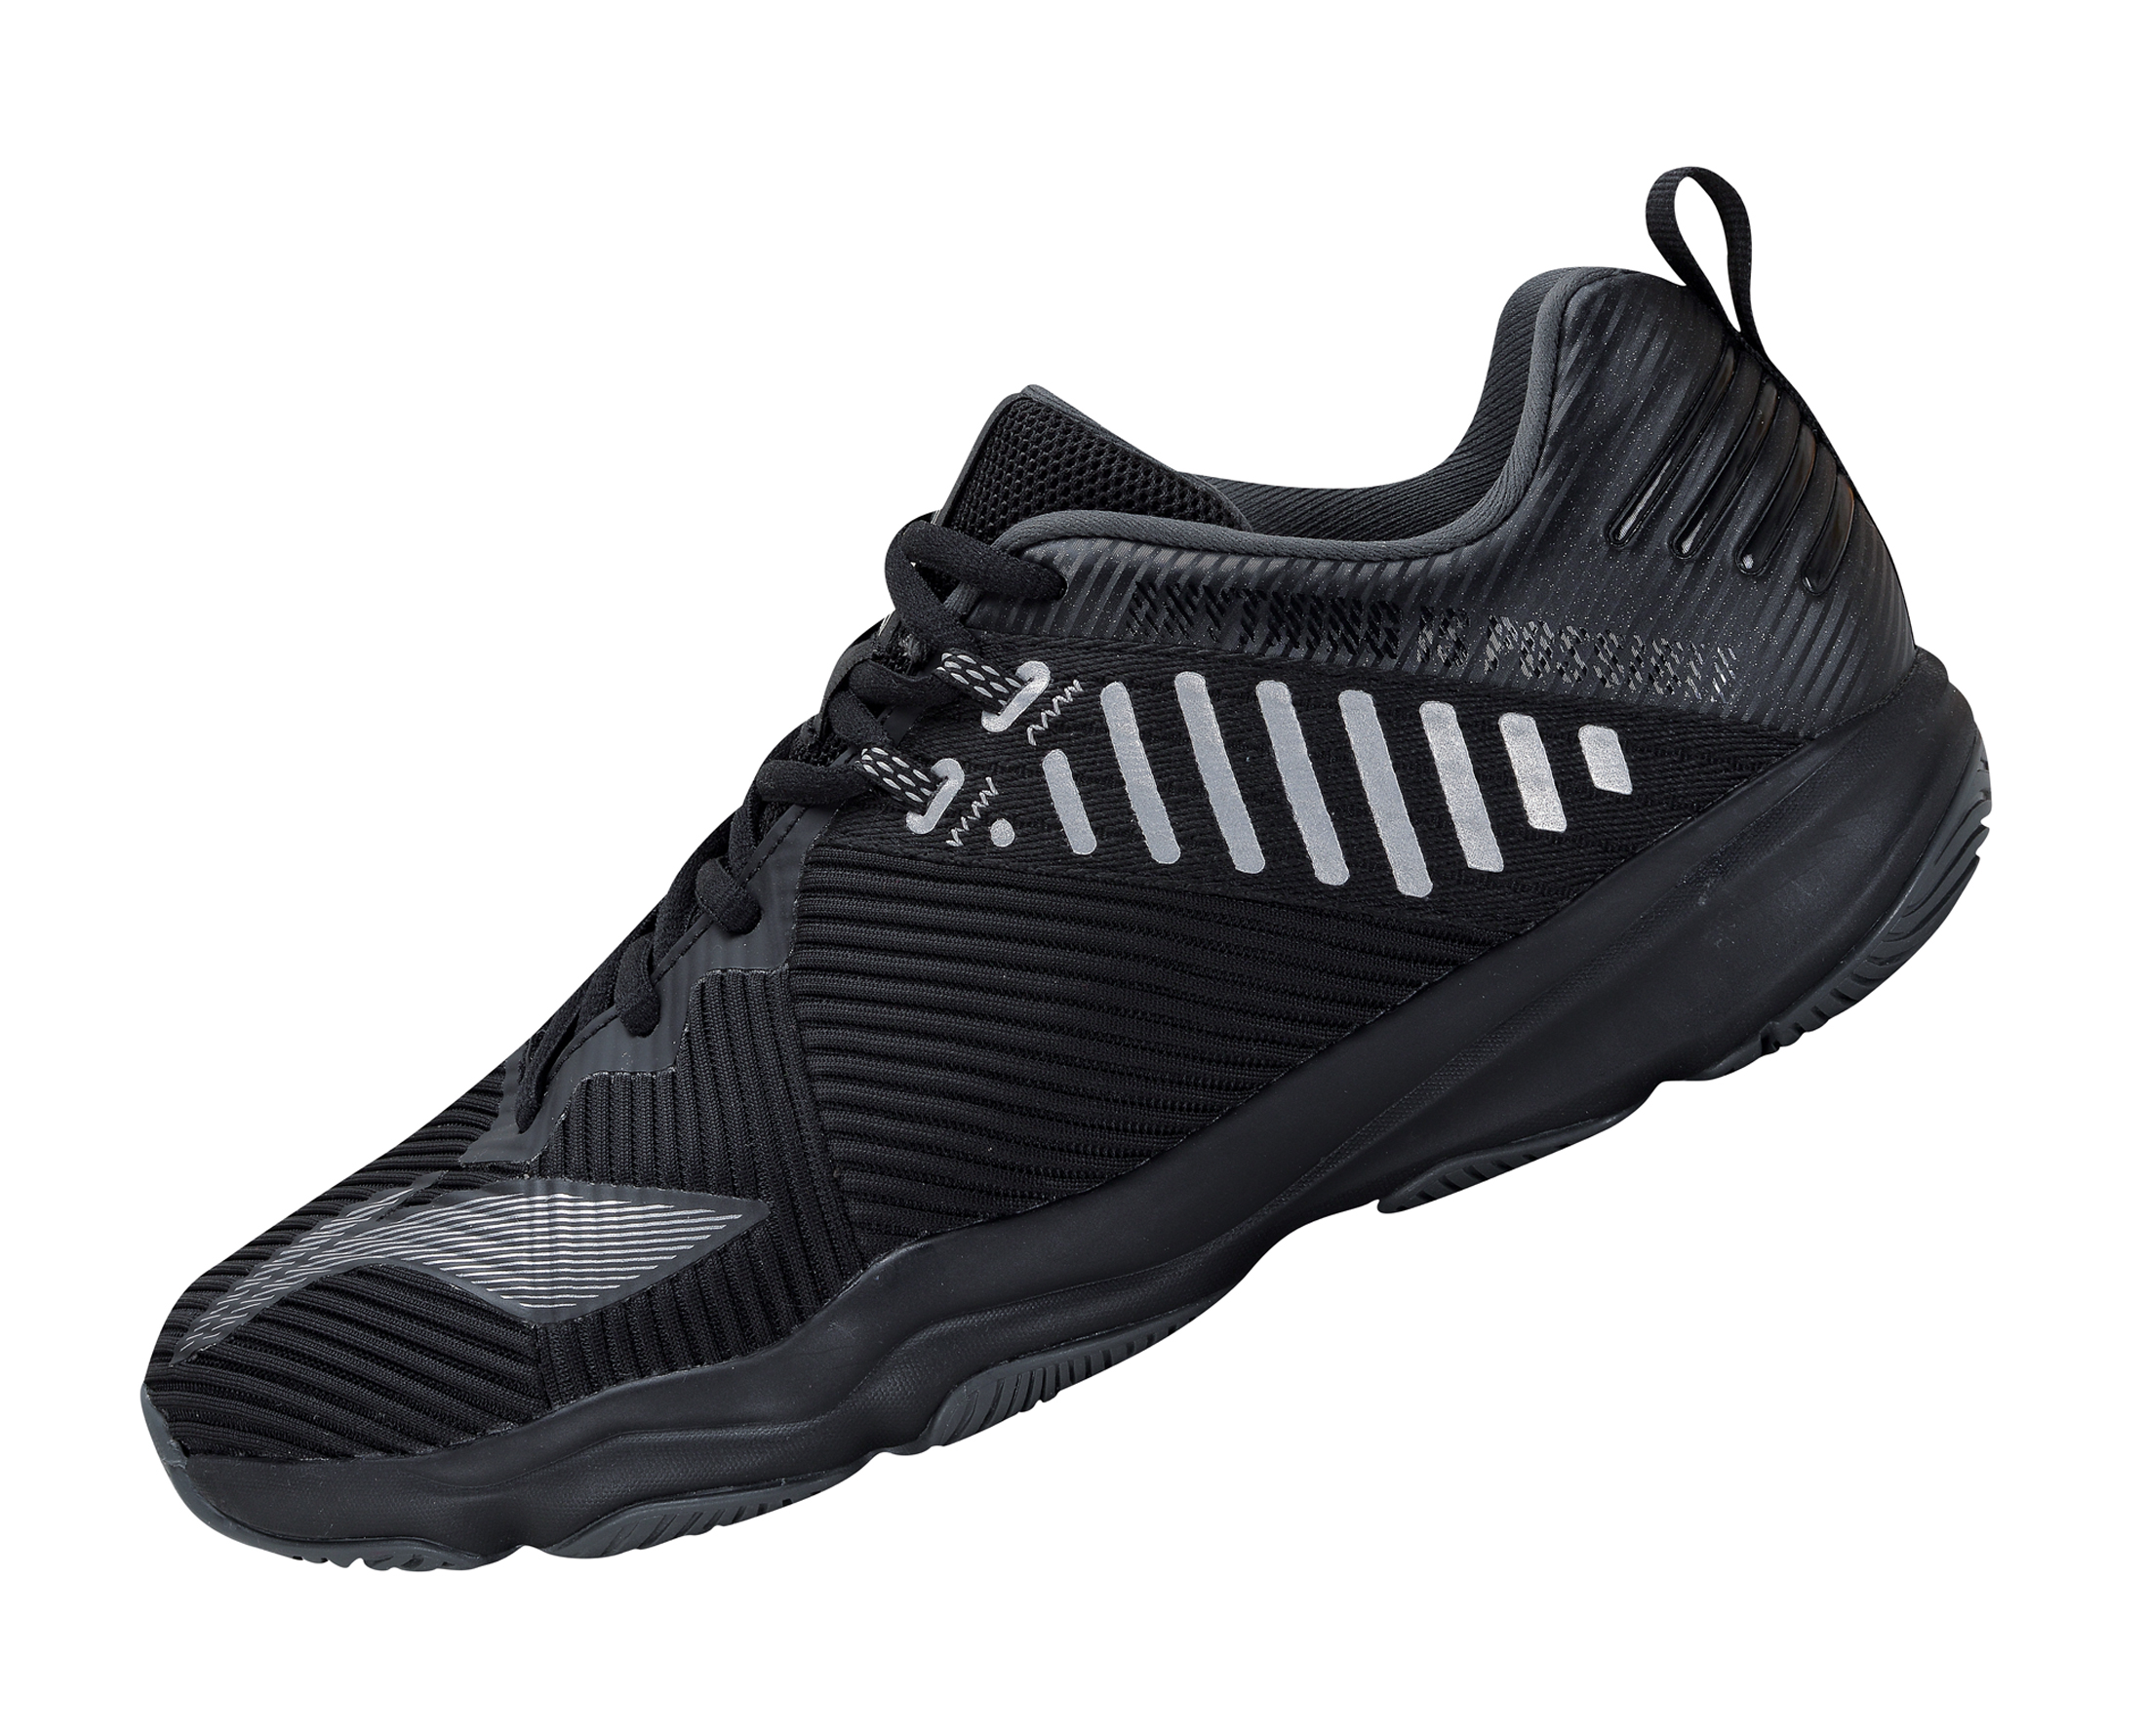 adidas gum sole shoes for badminton